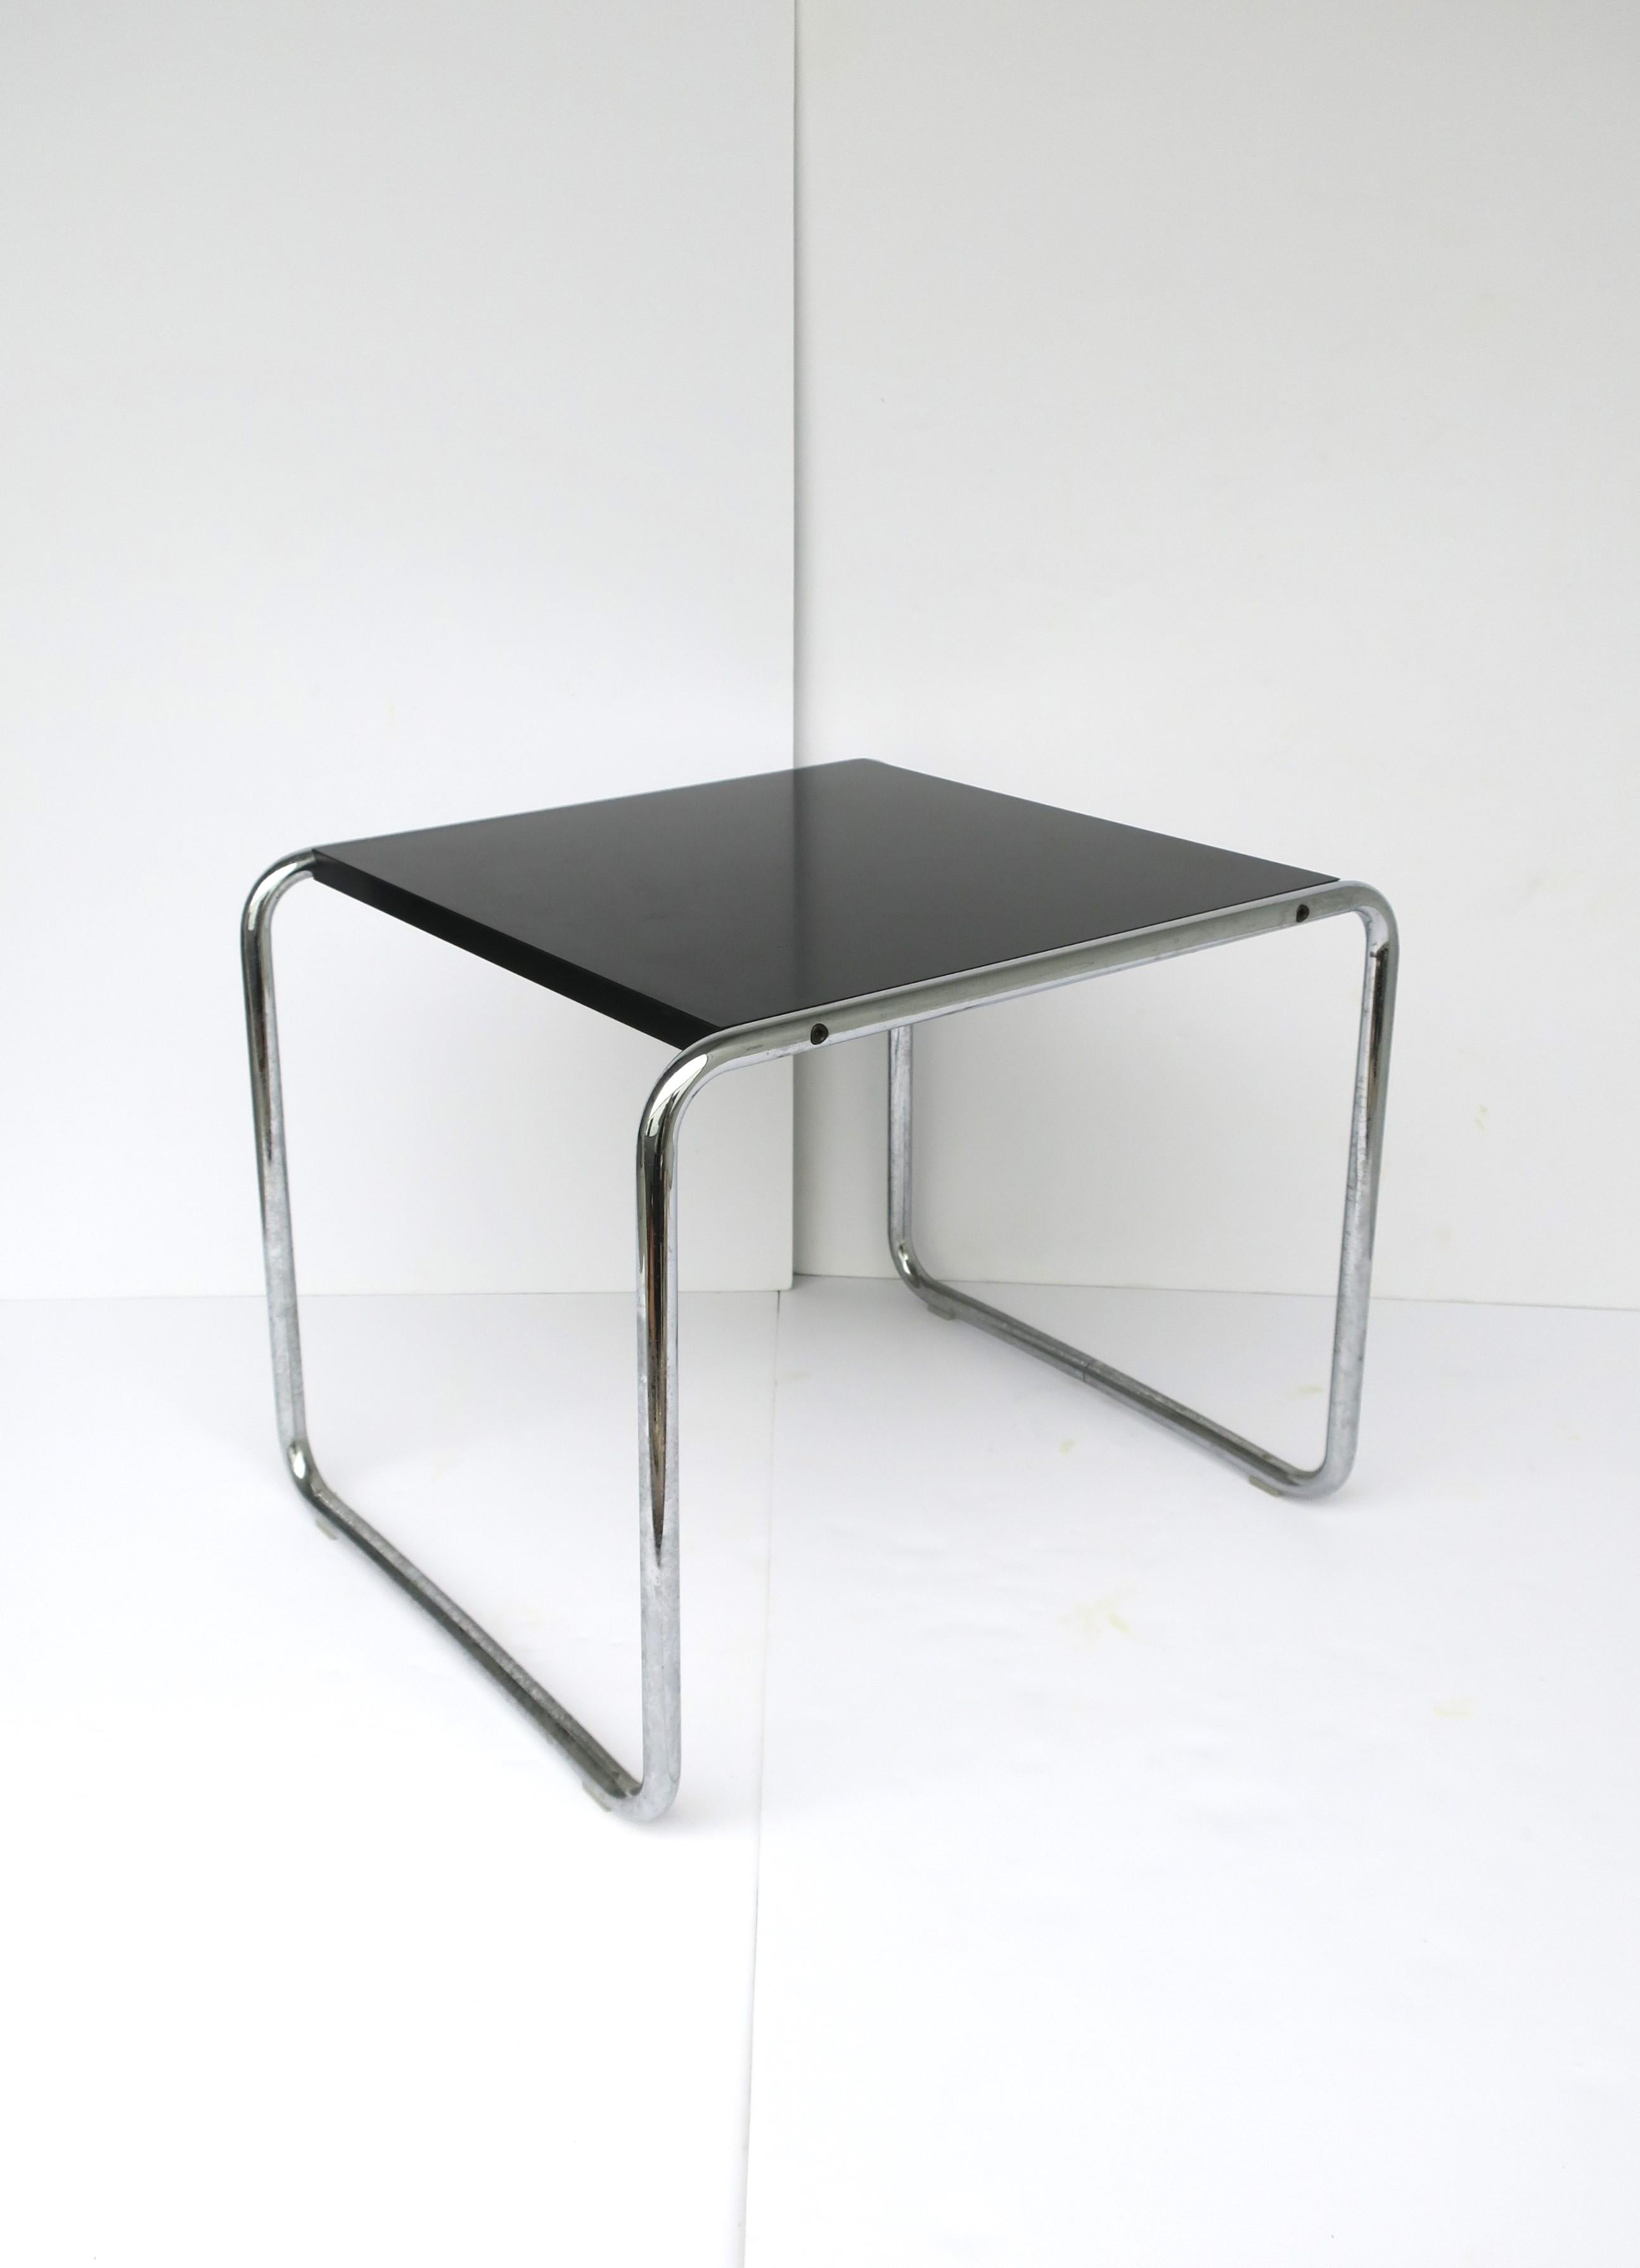 Italian Marcel Breuer Laccio Side End Table for Knoll Studio Chrome and Black Bauhaus For Sale